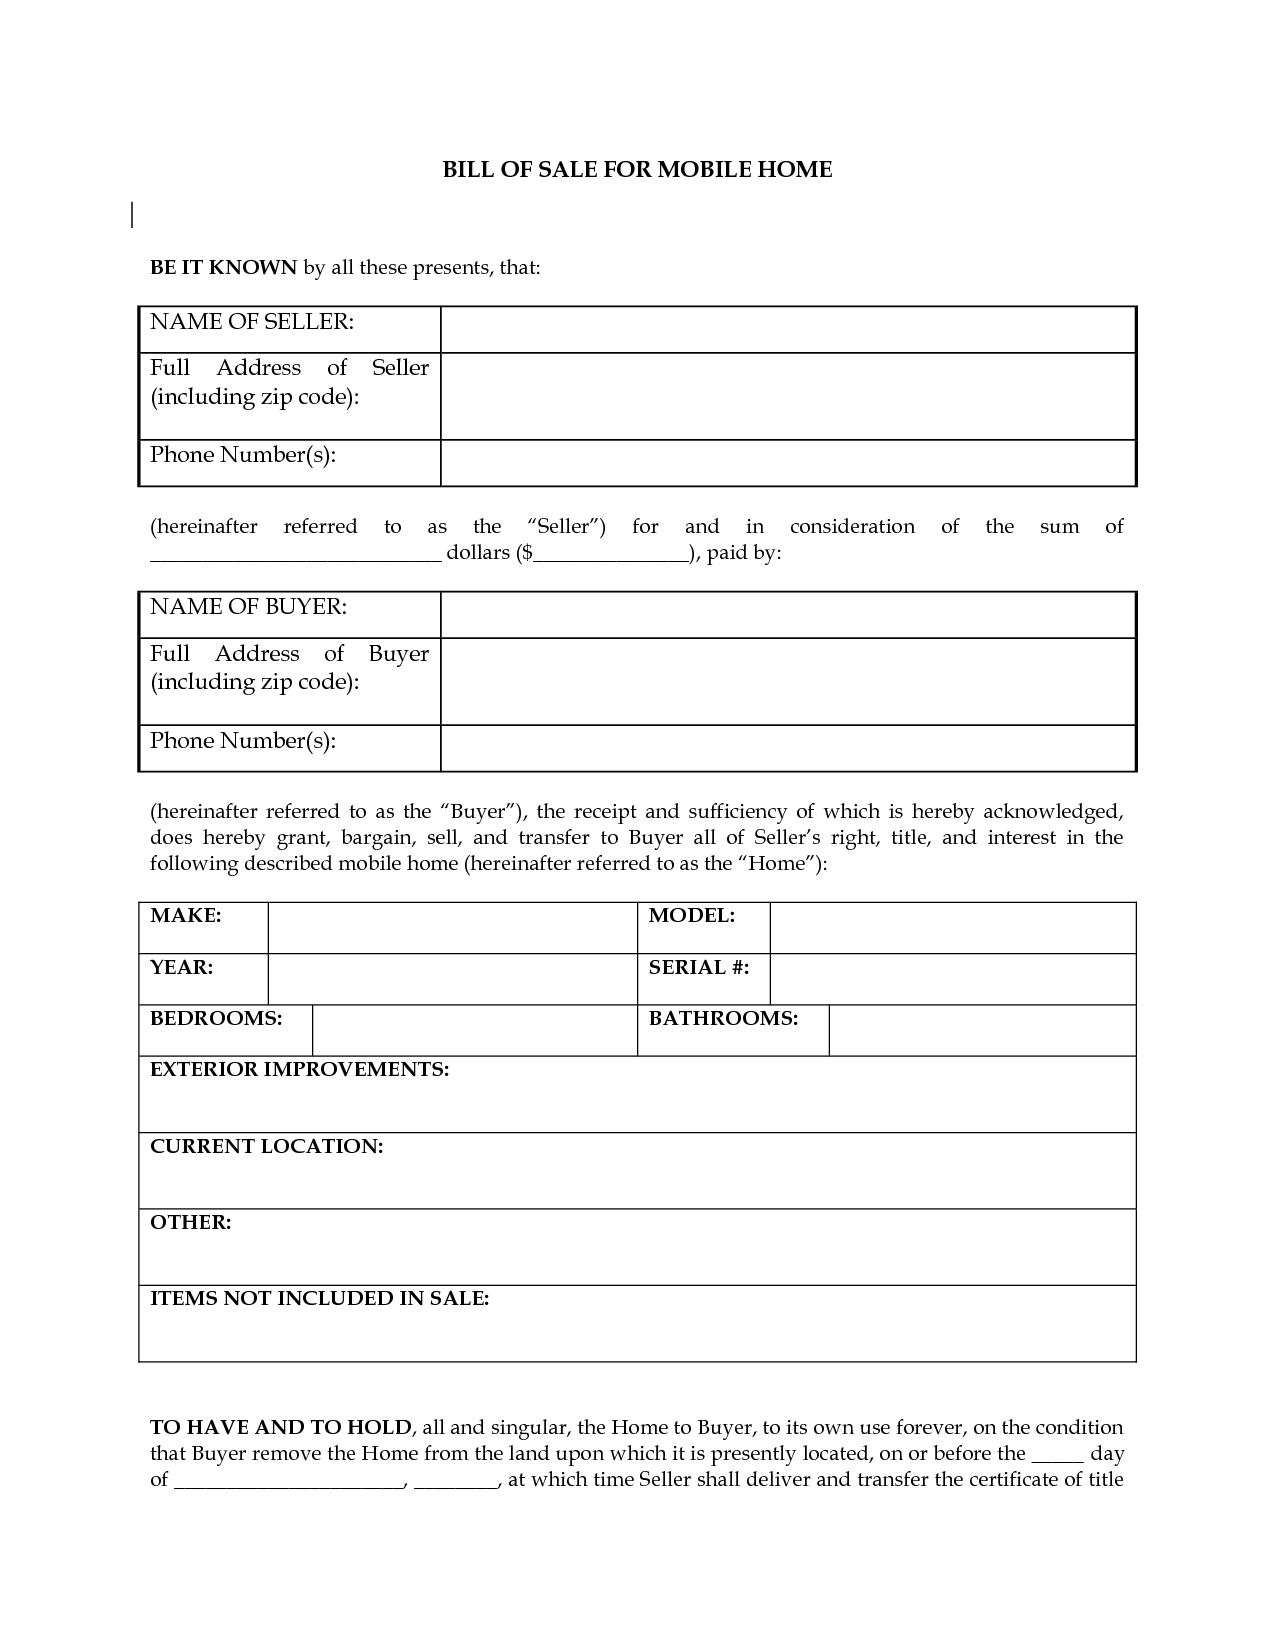 Free Printable Bill Of Sale Camper Form (Generic) - Free Printable Bill Of Sale For Mobile Home